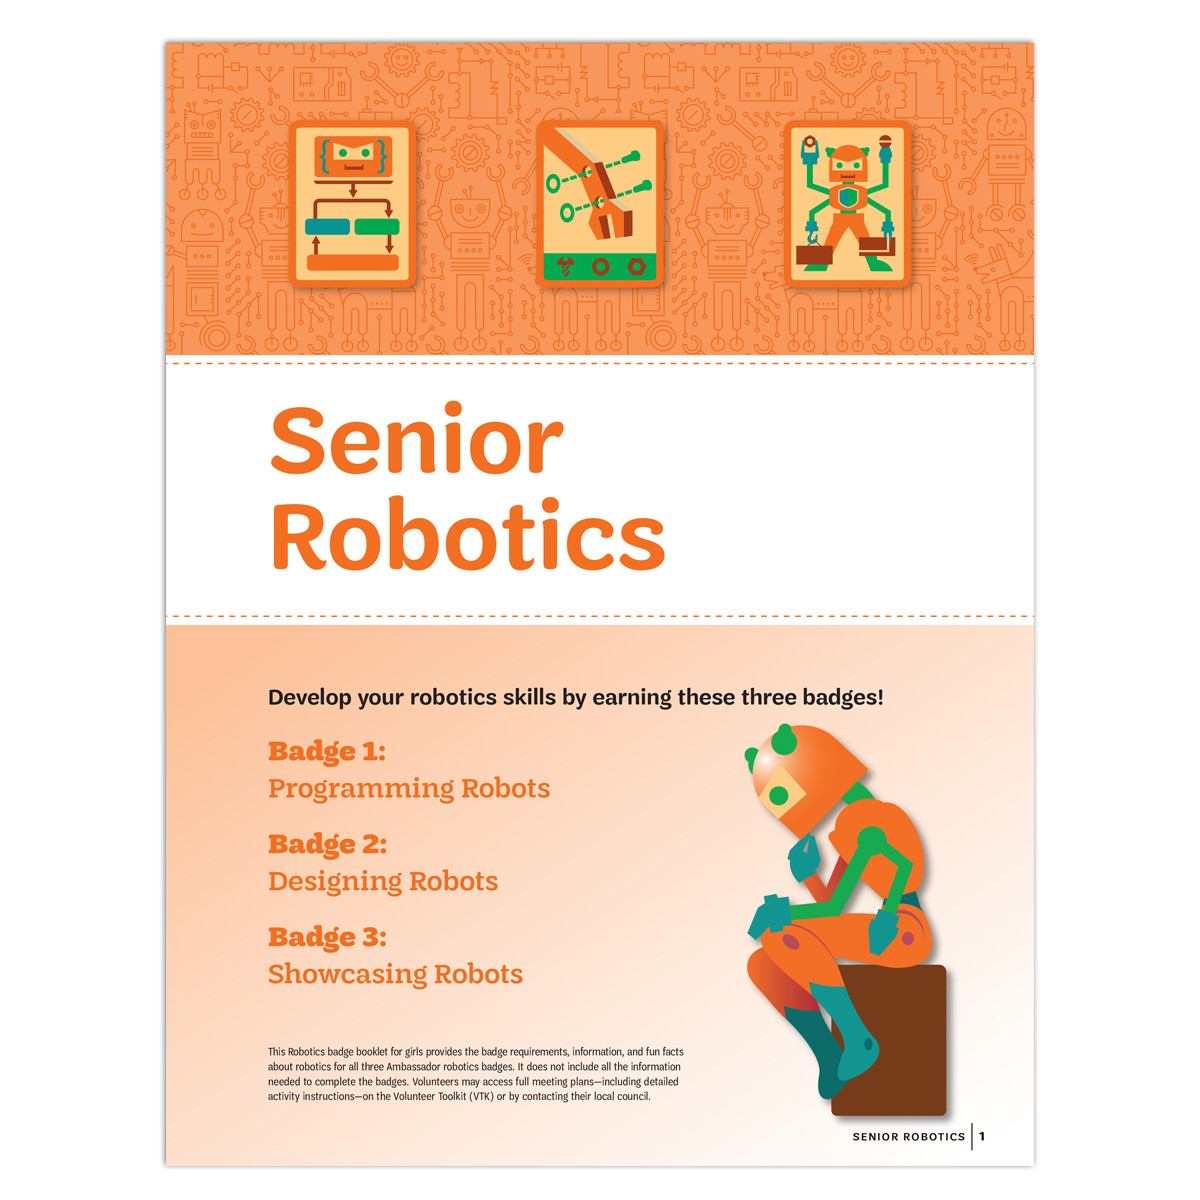 Senior Robotics Image.jpg